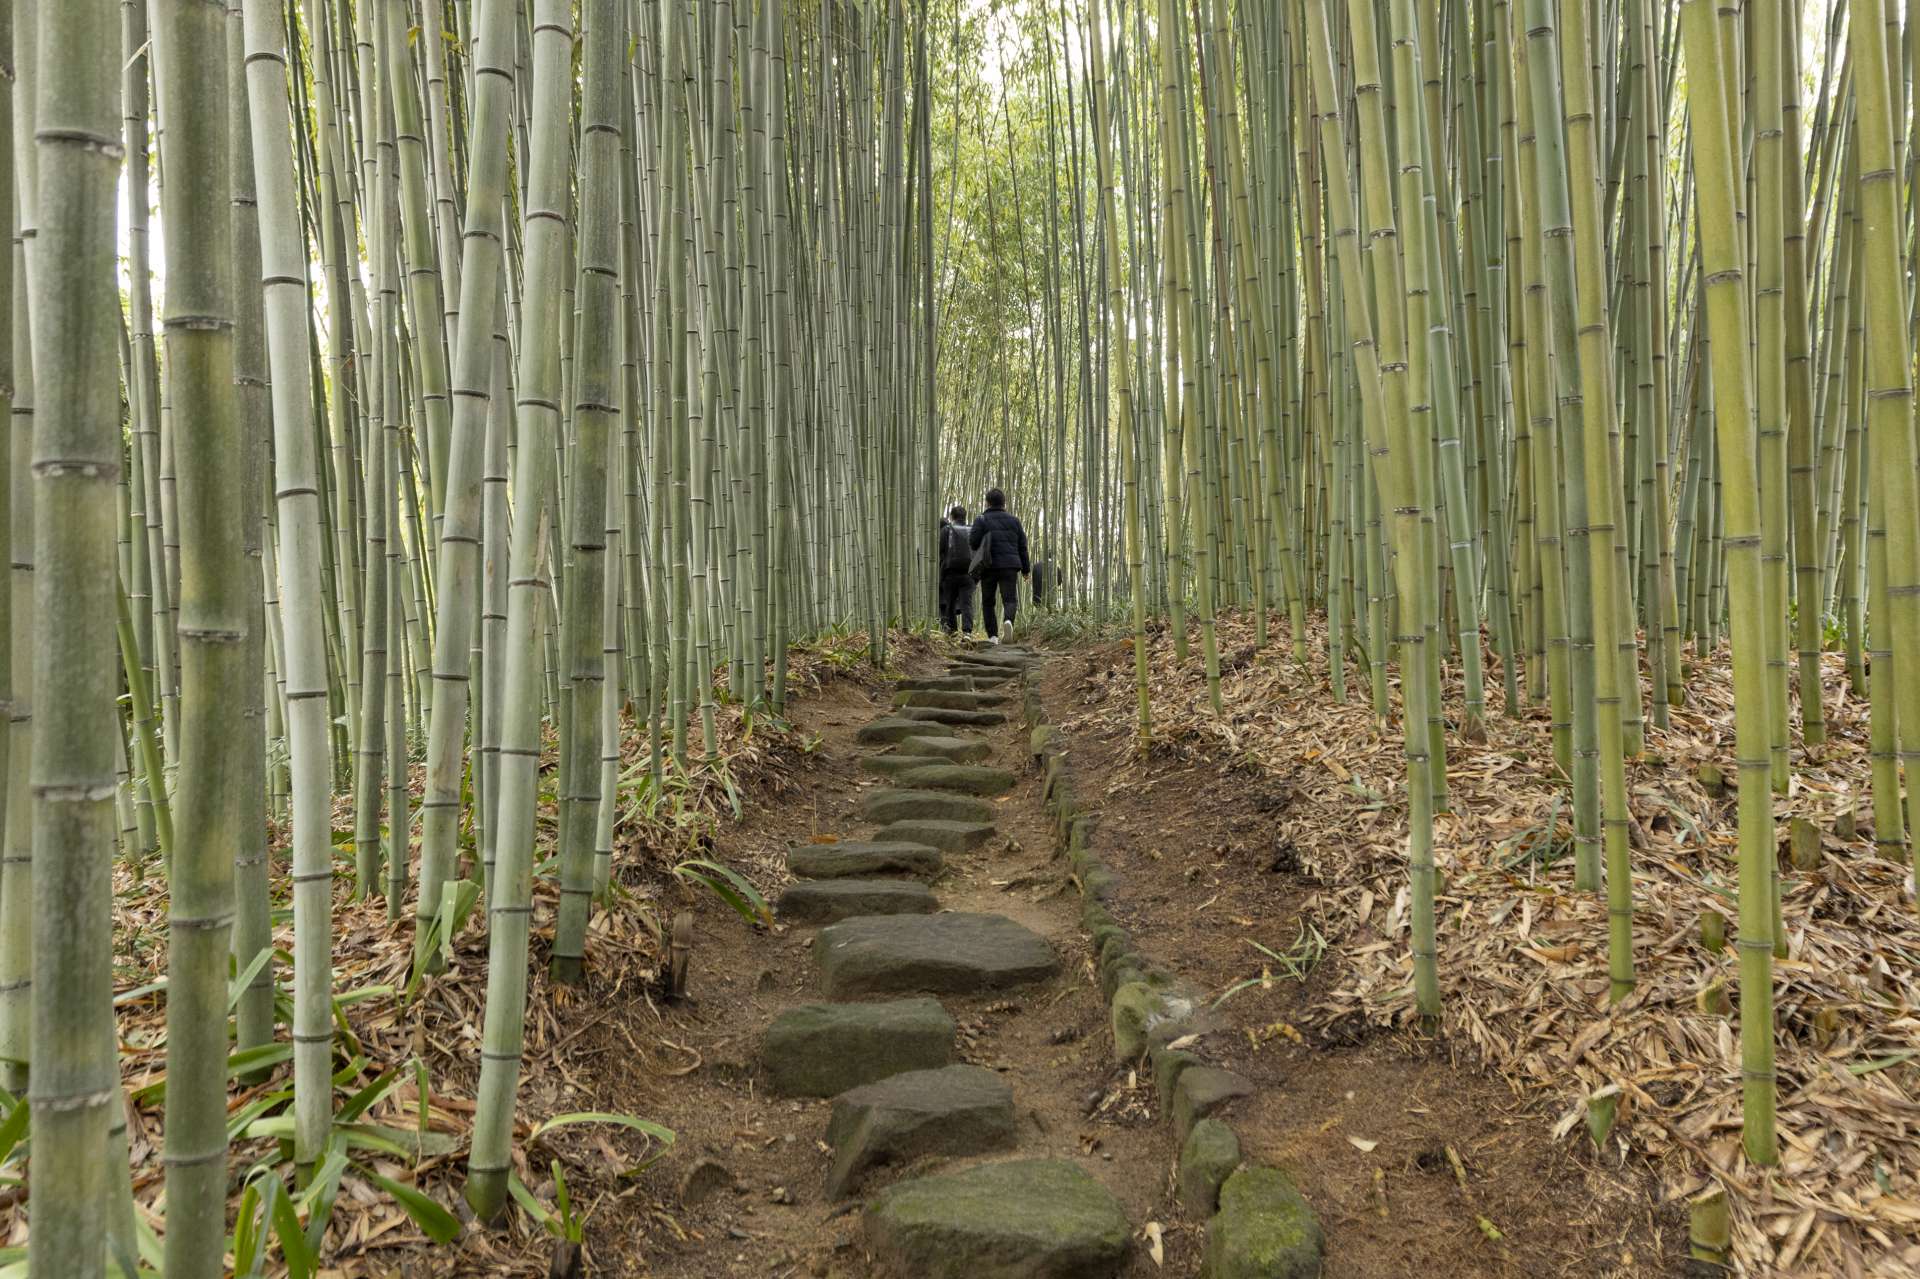 A stroll through the Kyoto City Rakusai Bamboo Park.